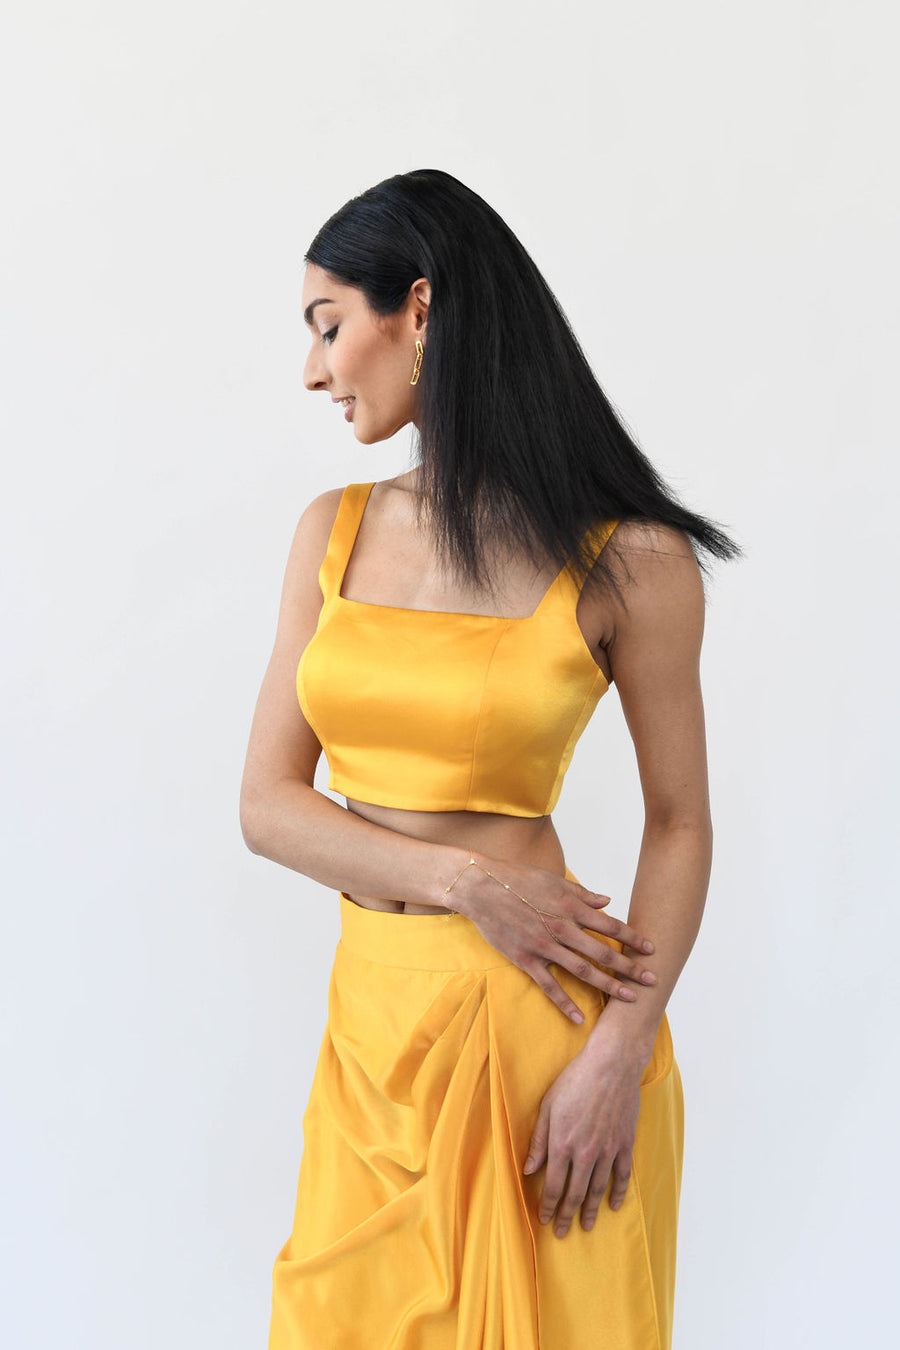 One Shoulder Silk Blouse for Women Sleeveless Satin Shirt 